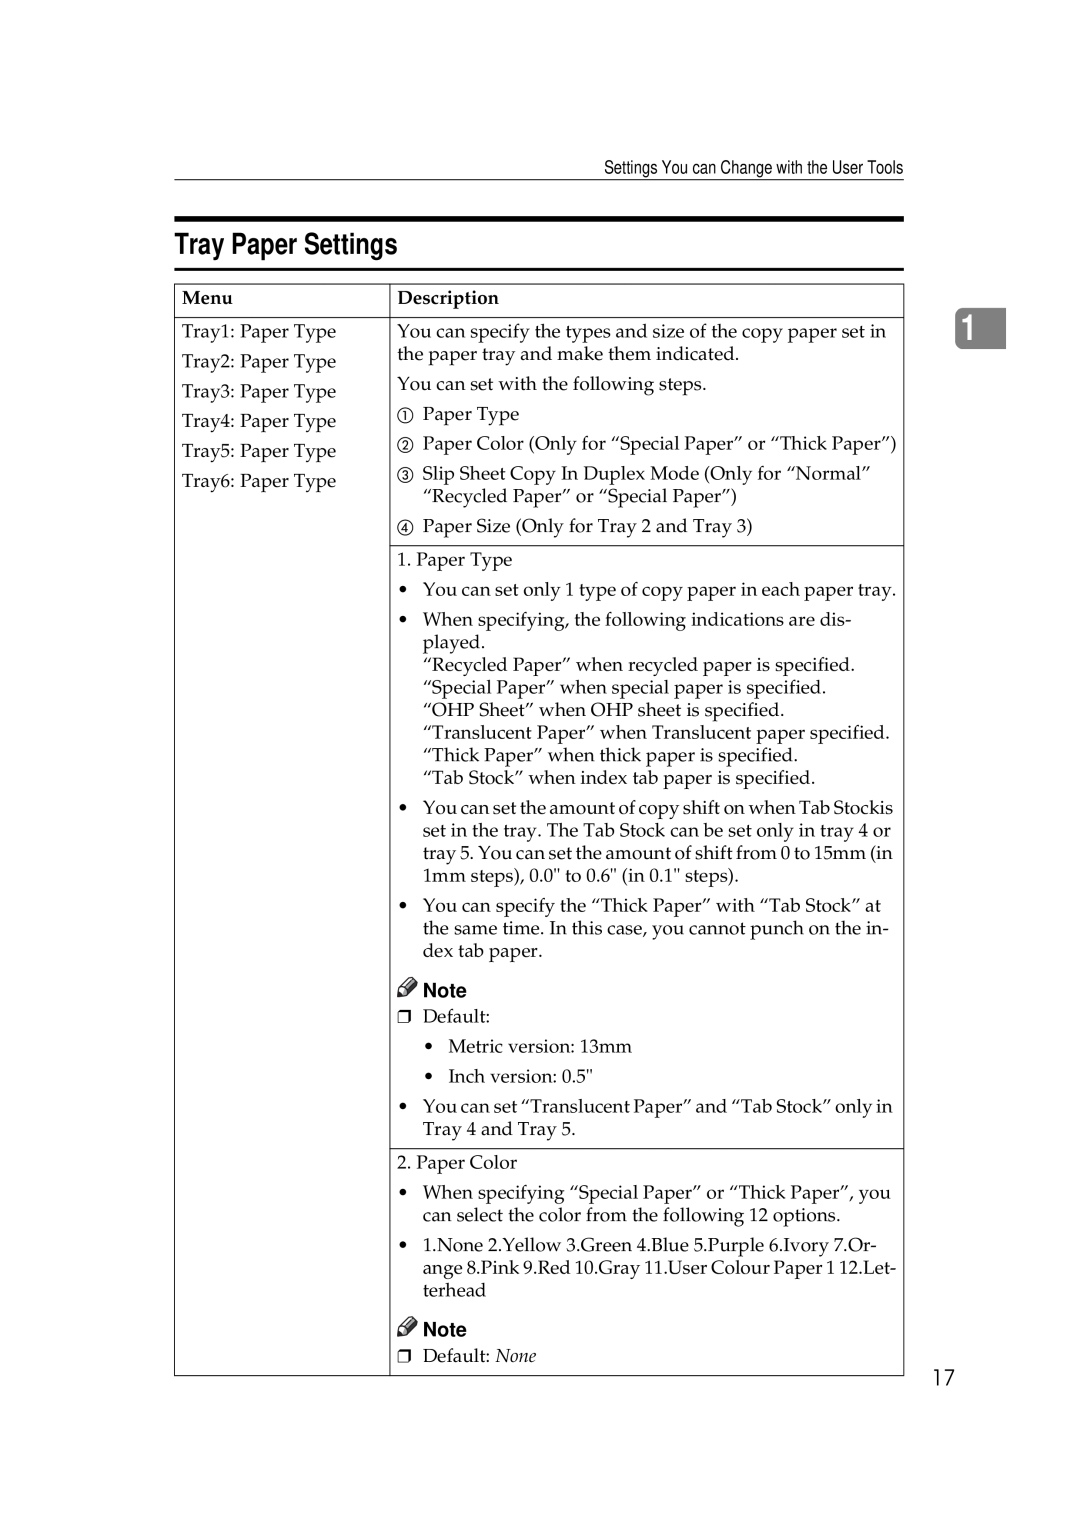 Savin 2585, 8502, 10502 manual Tray Paper Settings, Menu, Description 